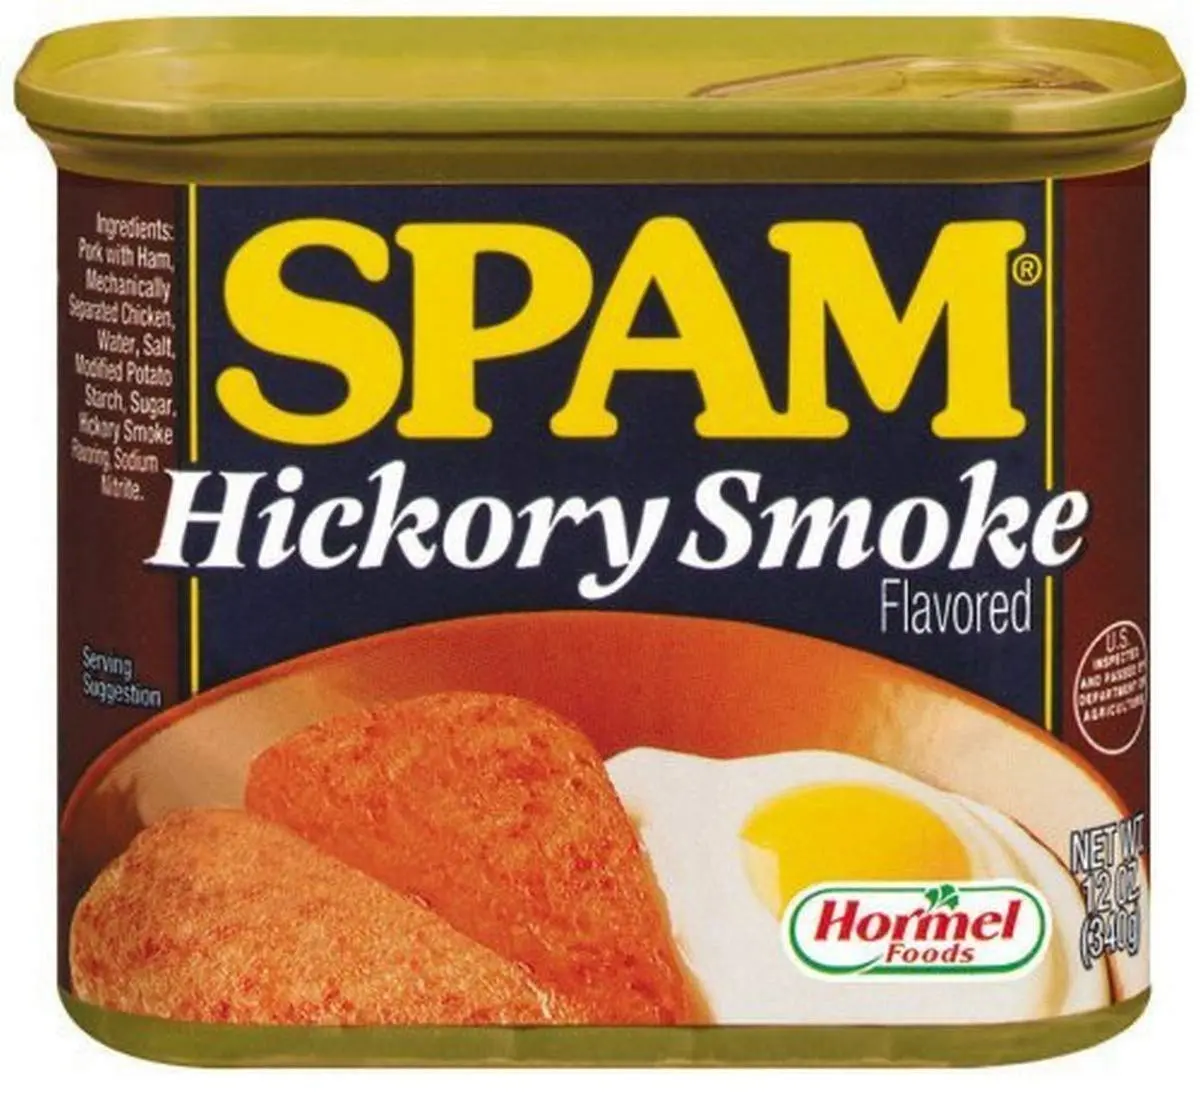 hickory smoked spam - Can I smoke spam